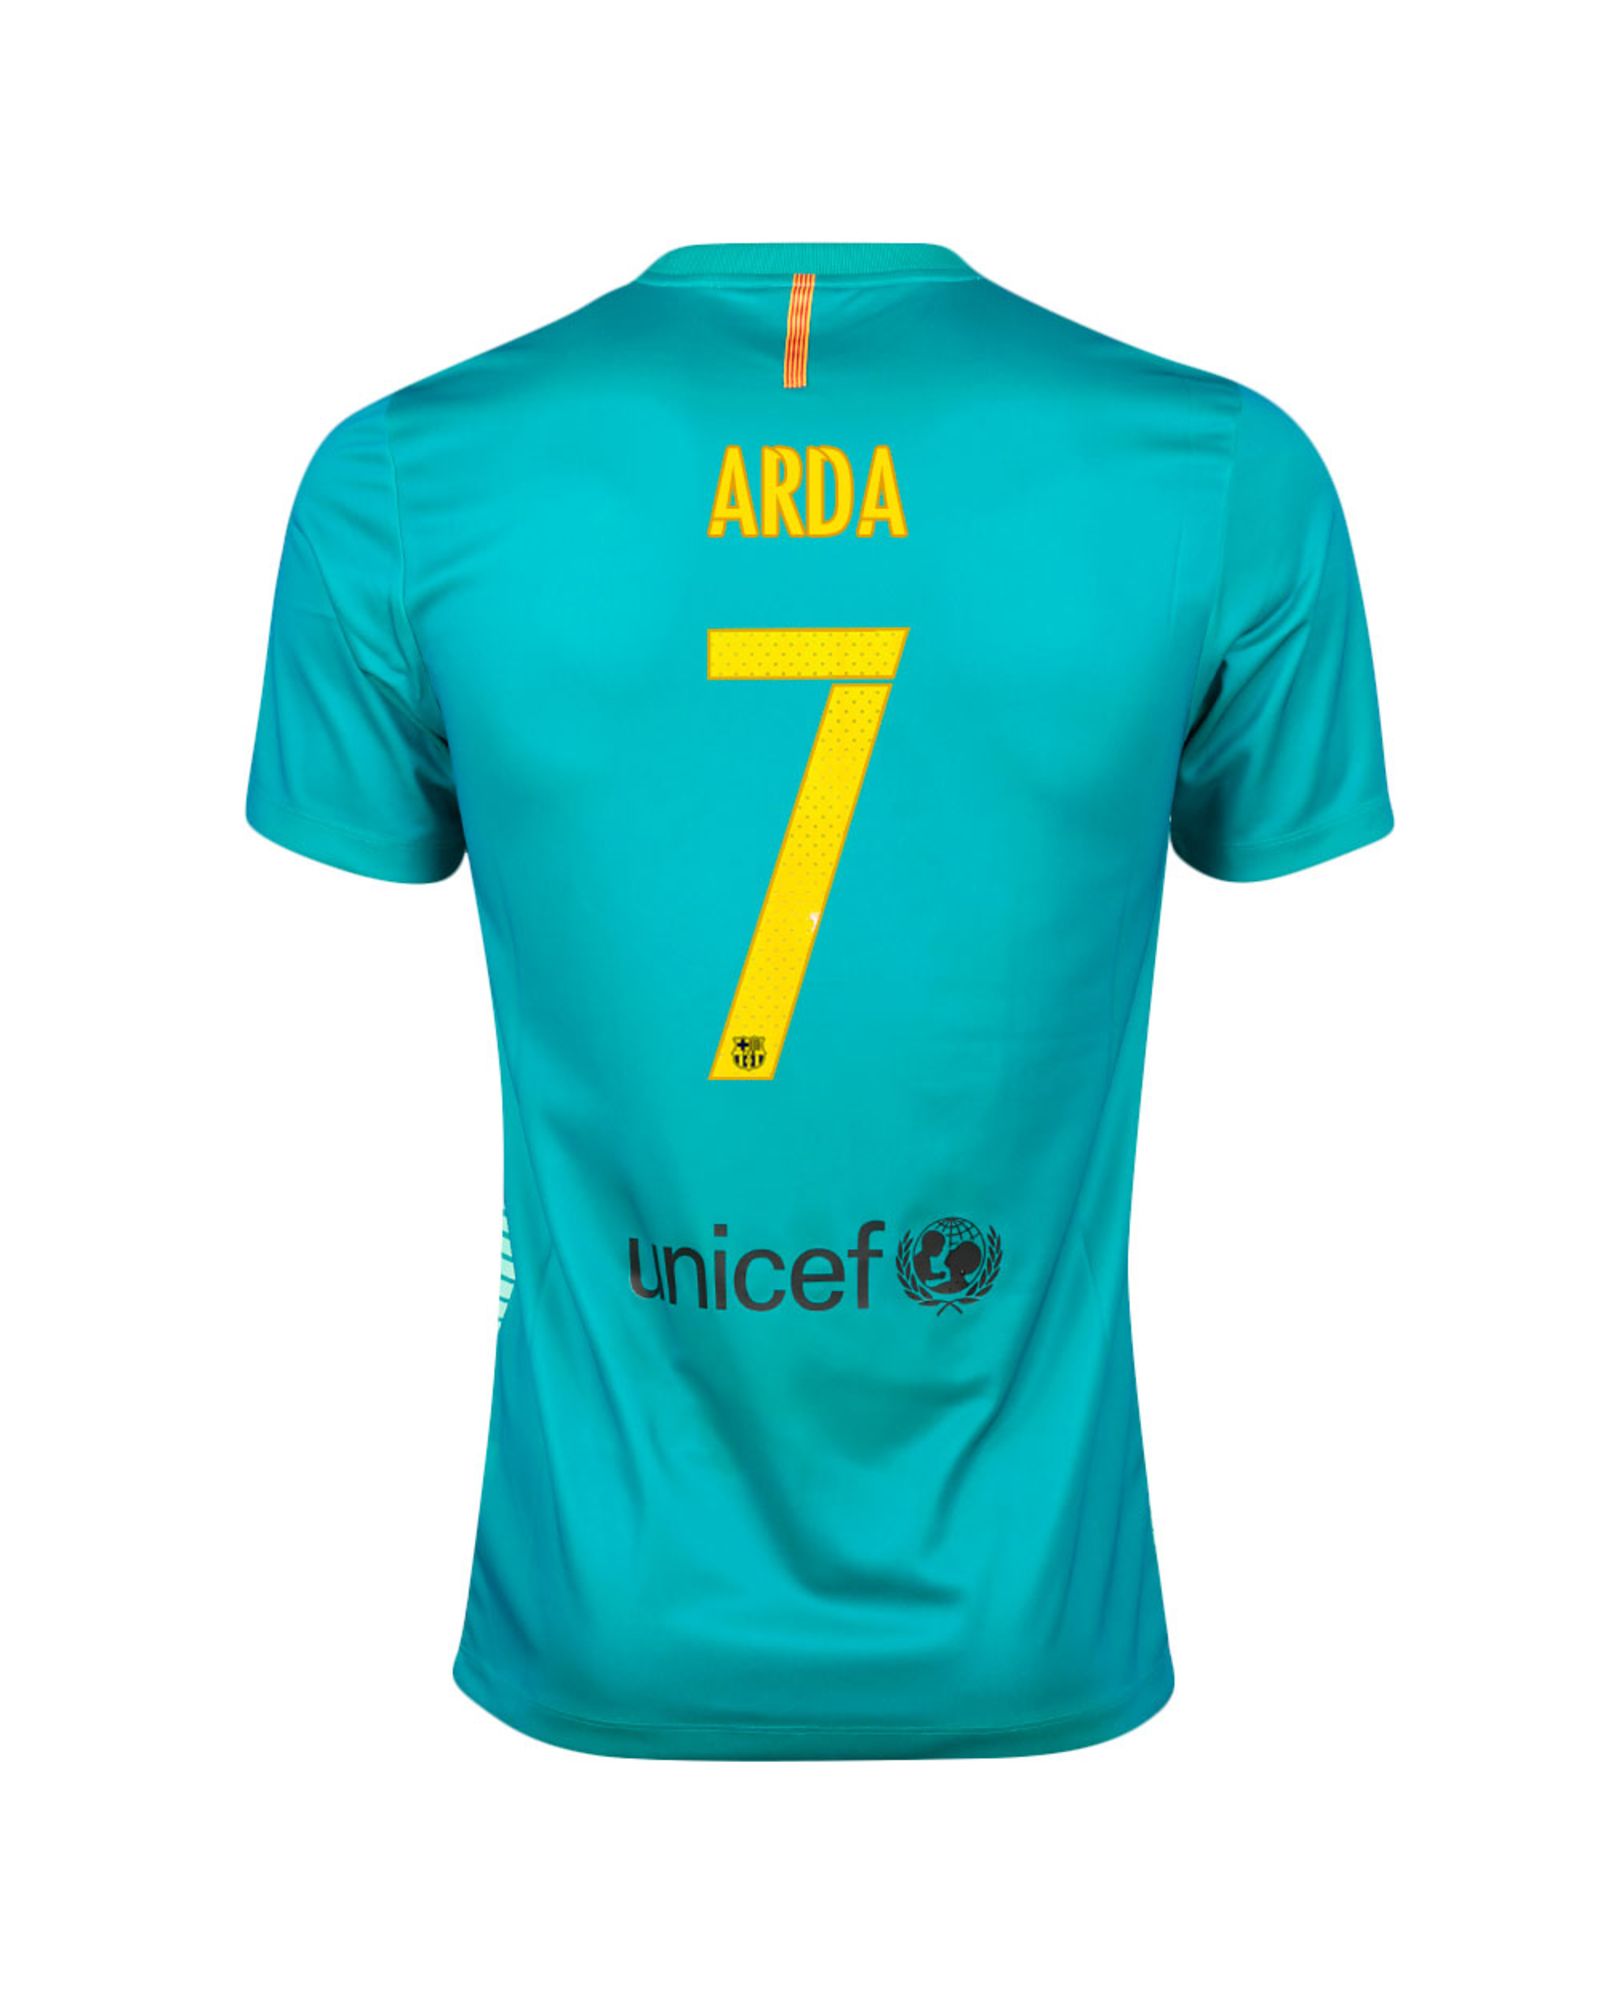 Camiseta 3ª FC Barcelona 2016/2017 Arda UCL Supporters Verde - Fútbol Factory